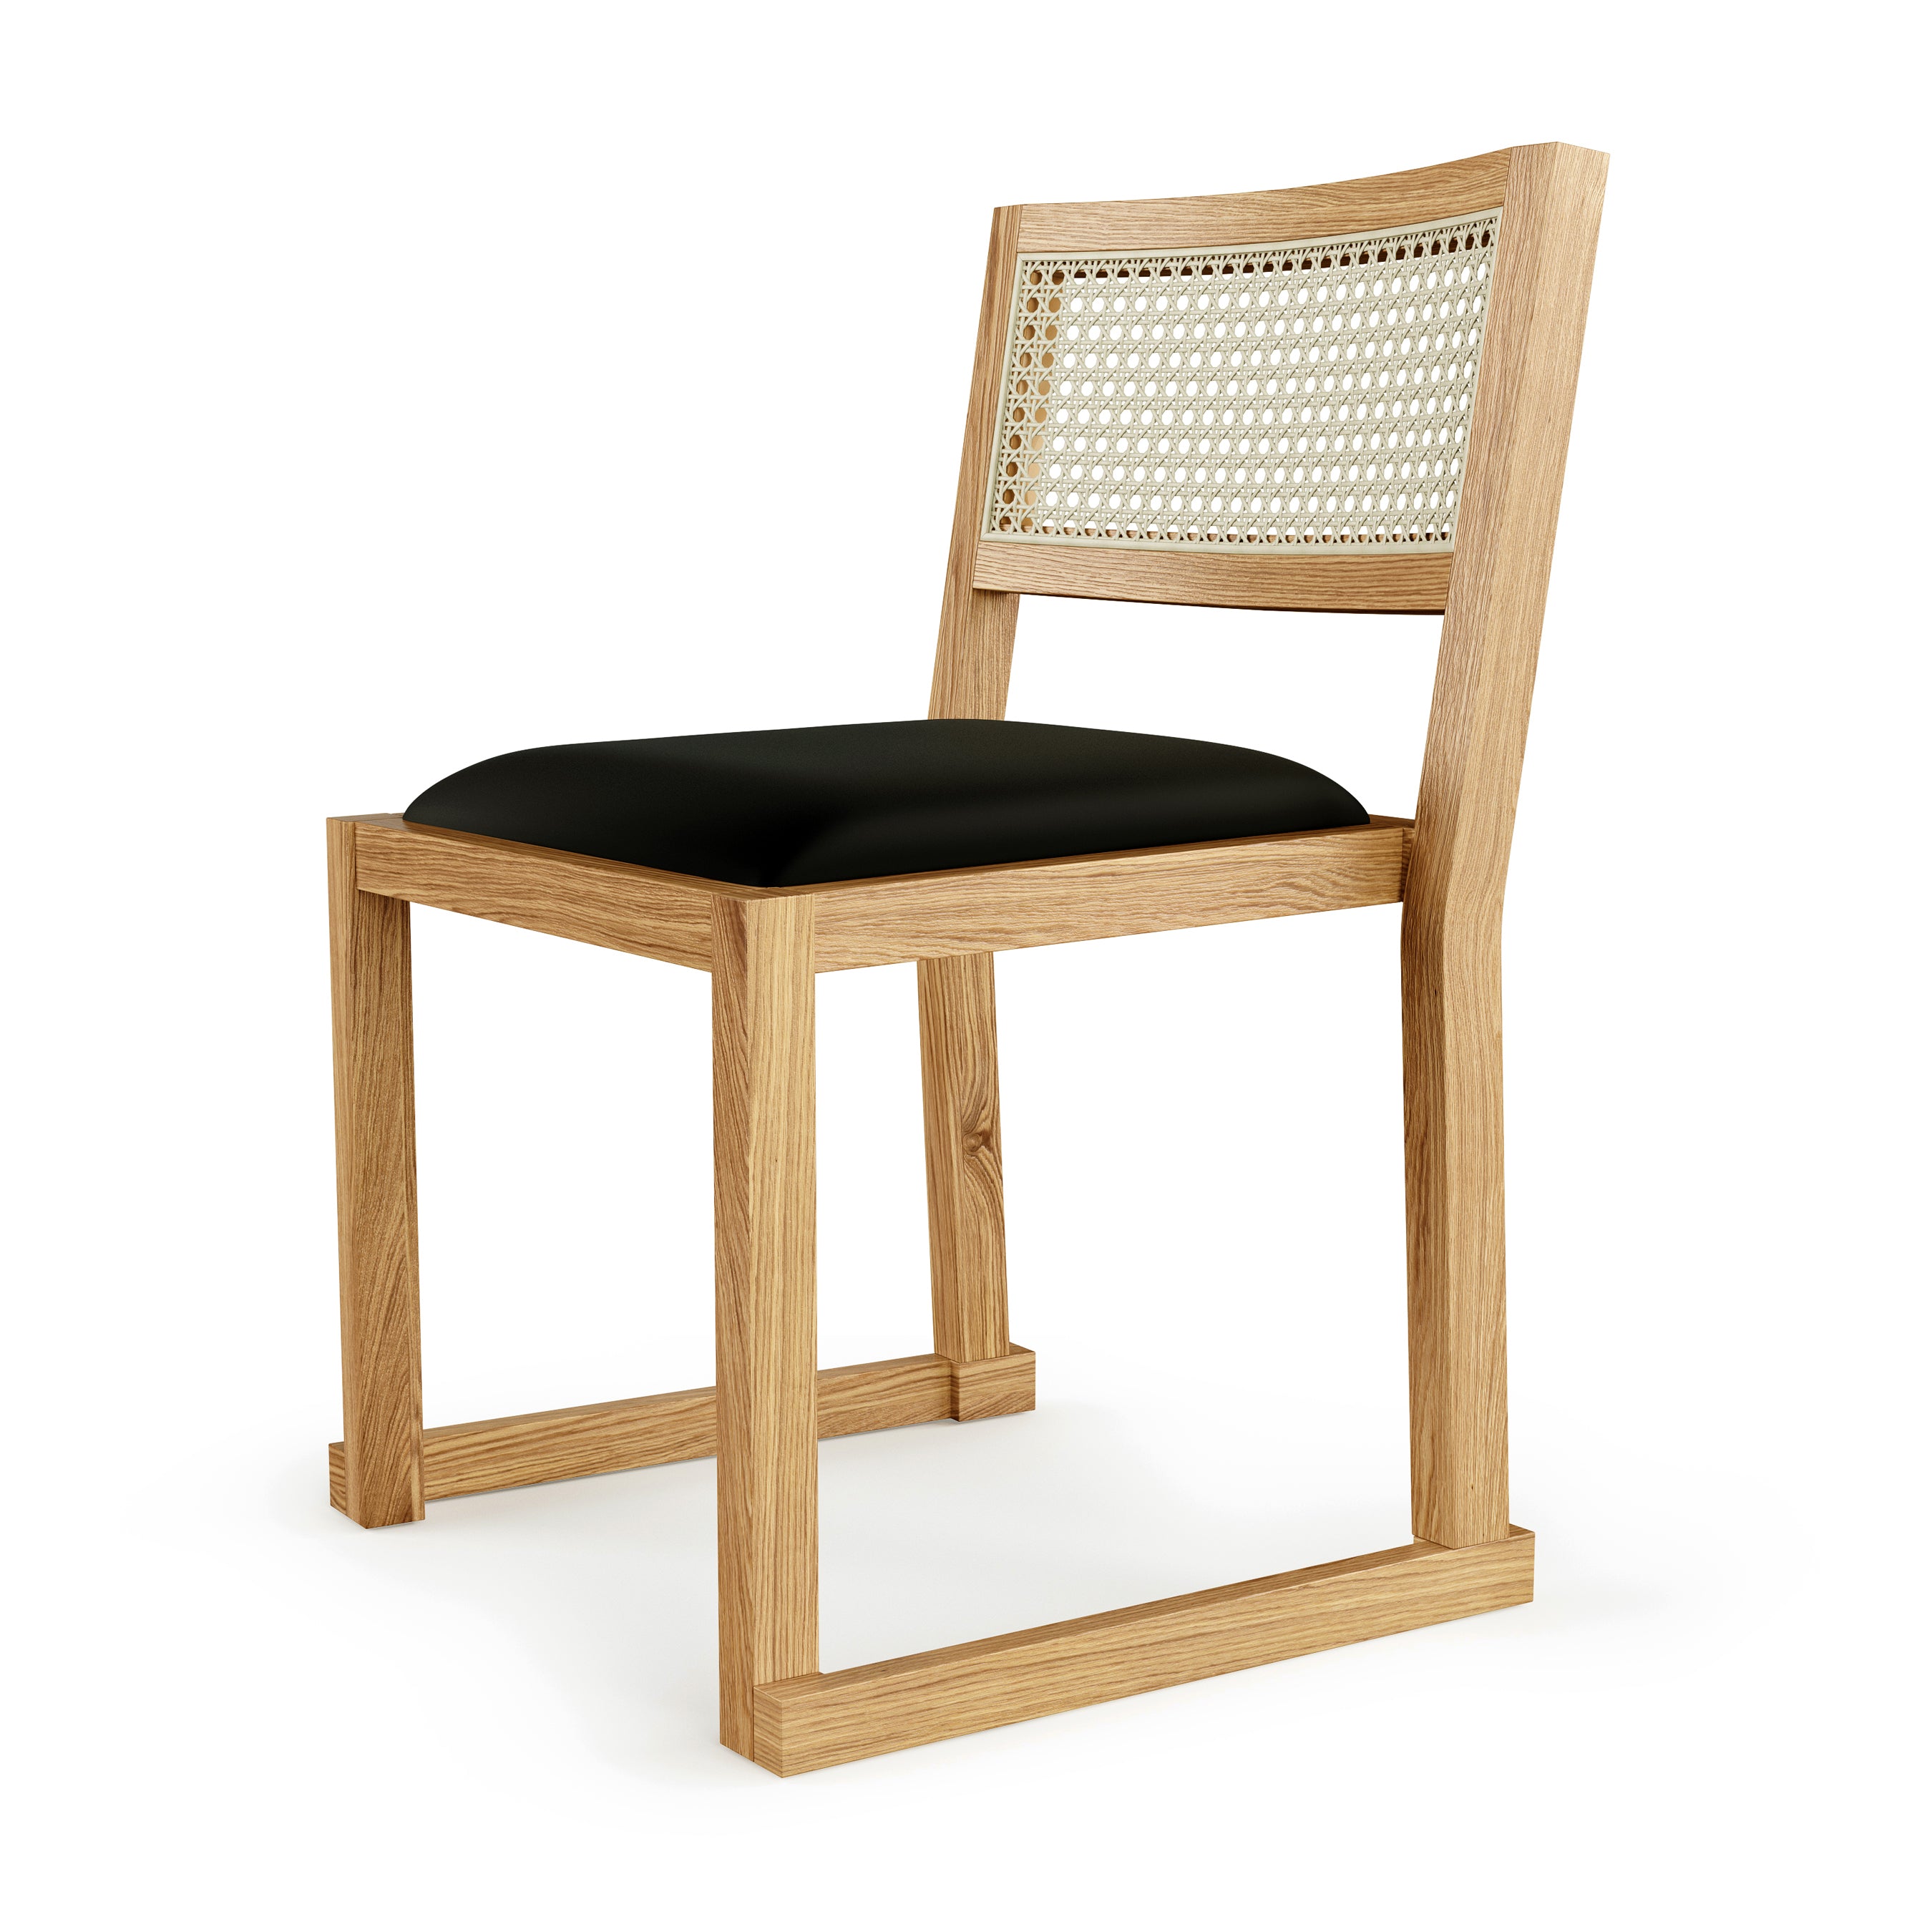 Eglinton Dining Chair Set/2